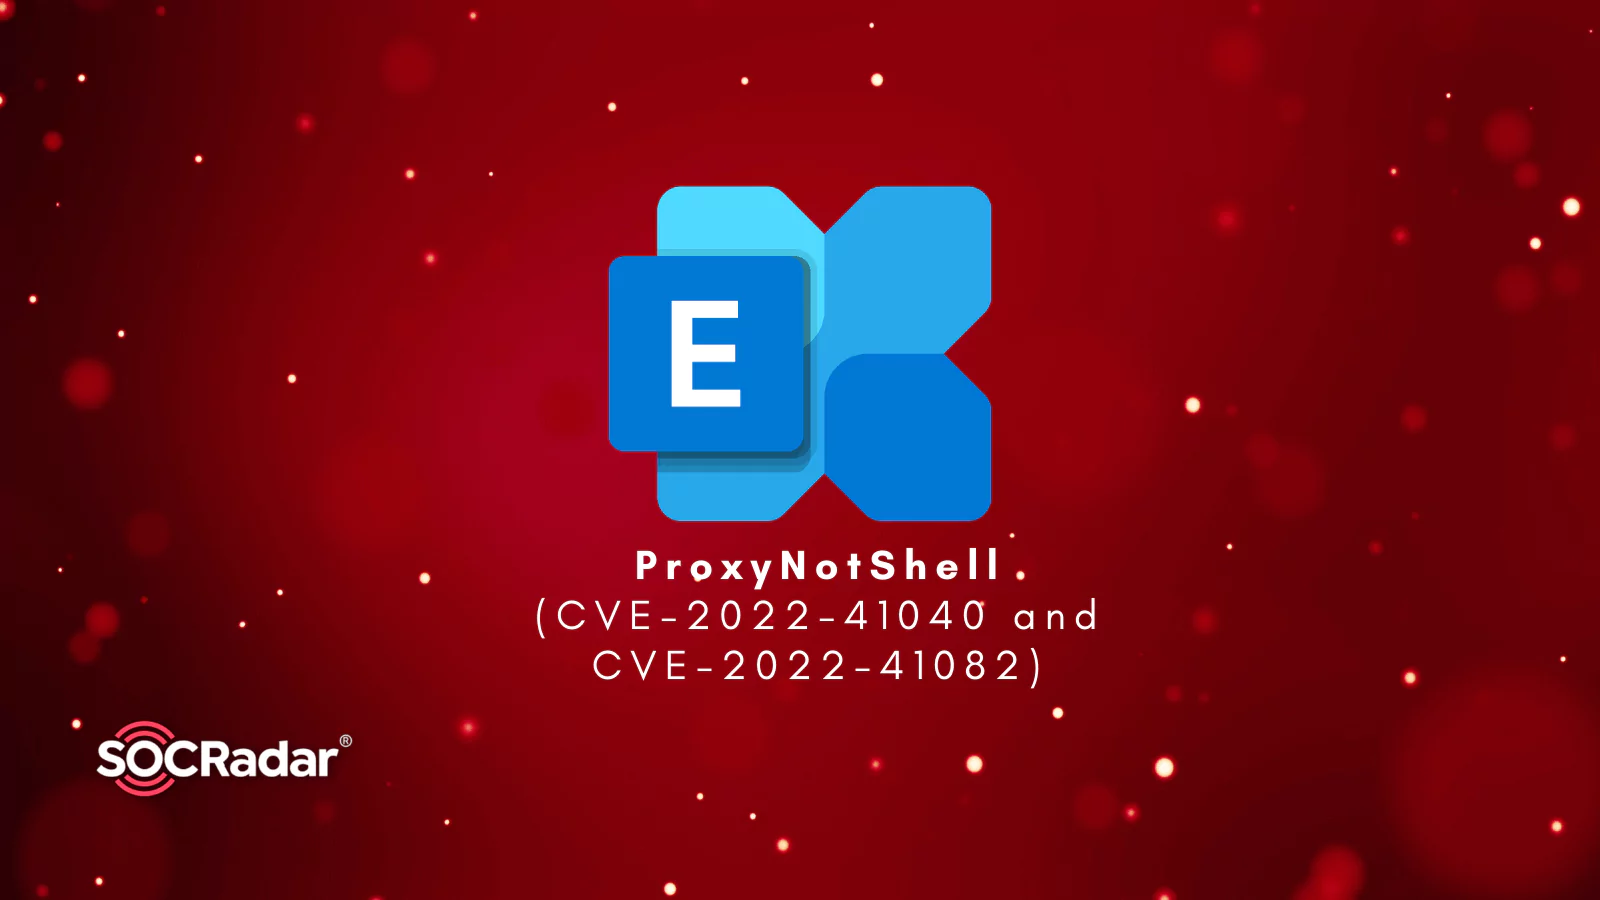 SOCRadar® Cyber Intelligence Inc. | Reports of ProxyNotShell Vulnerabilities Being Actively Exploited (CVE-2022-41040 and CVE-2022-41082)